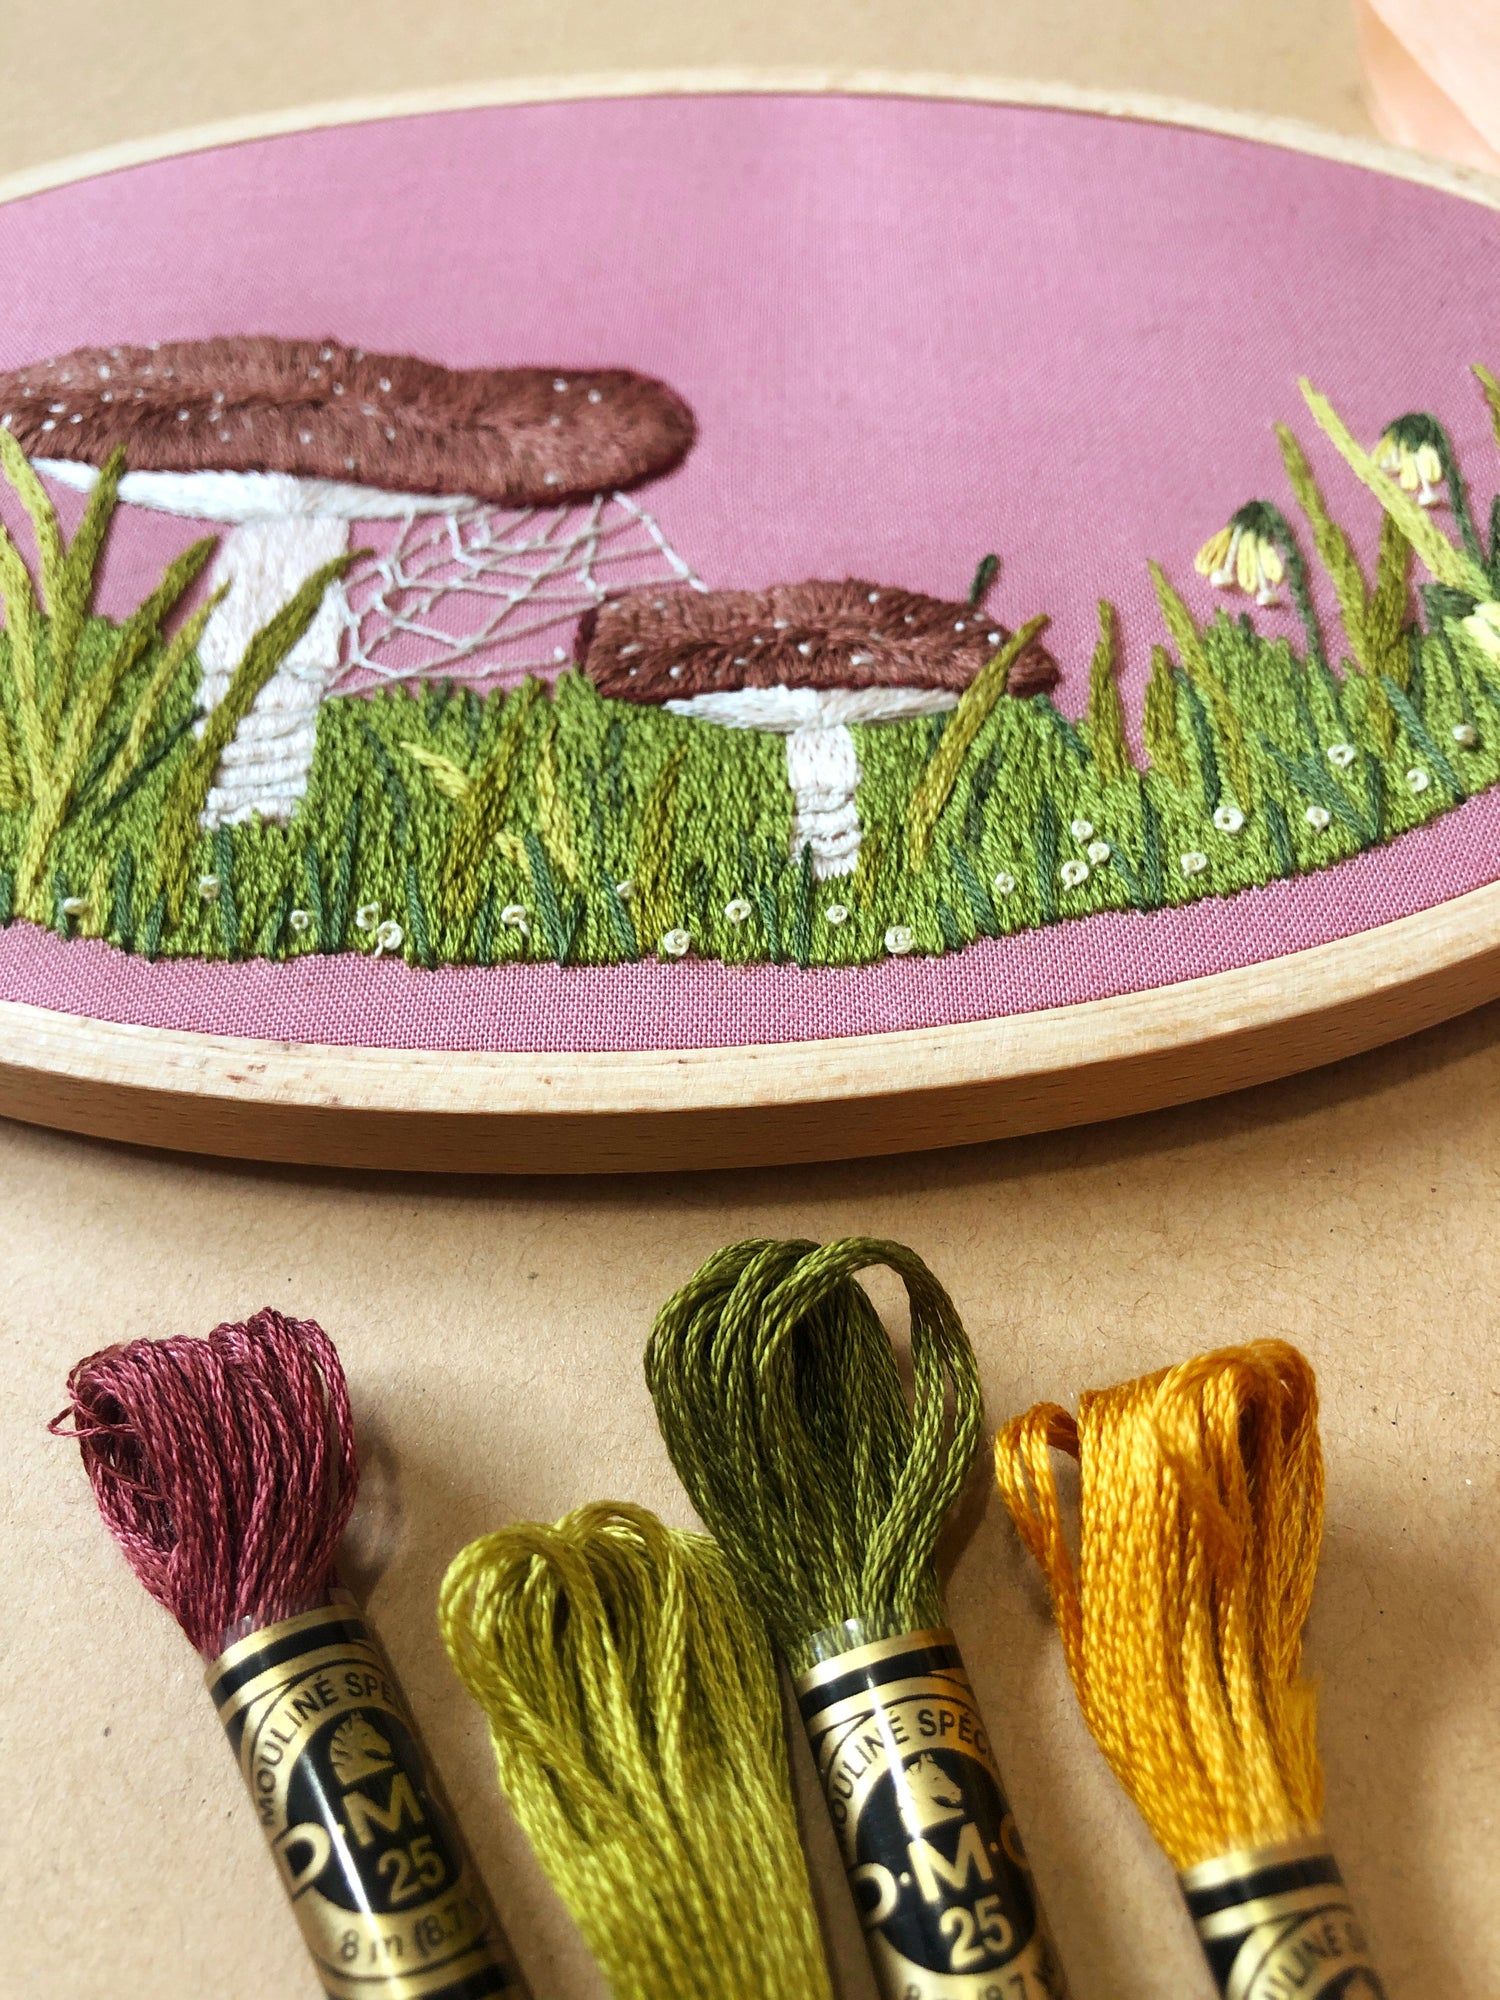 Magical Mushroom Embroidery Kit DIY Kit Embroidery Kit Paint With Threads  Mushroom Embroidery Beginner Friendly 